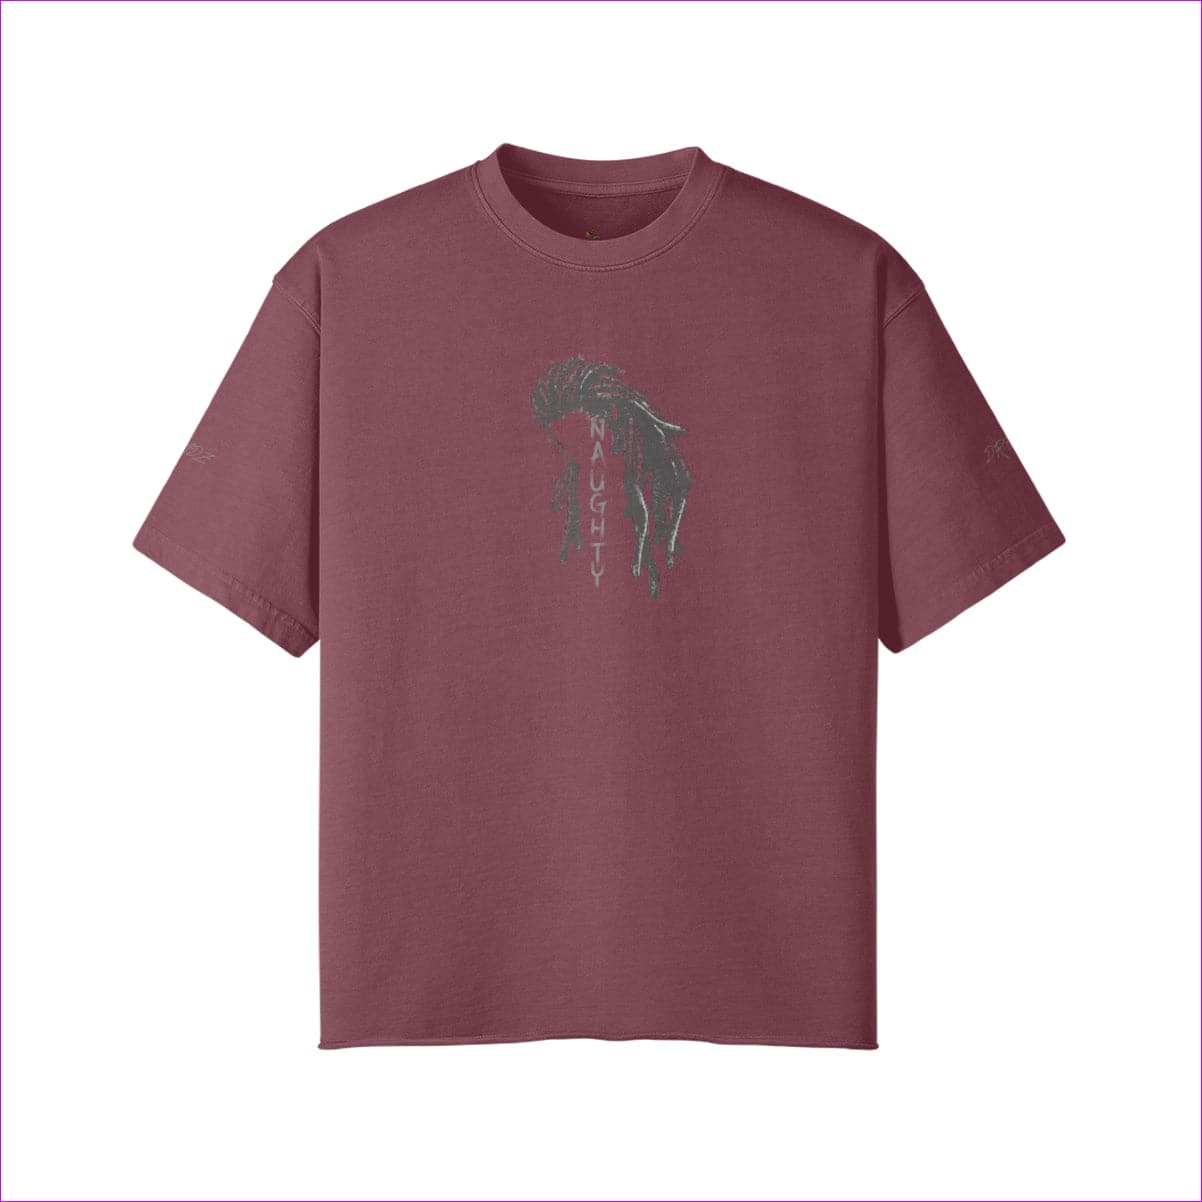 Cameo Brown - Naughty Dreadz Washed Raw Edge T-shirt - 8 colors - mens t-shirt at TFC&H Co.